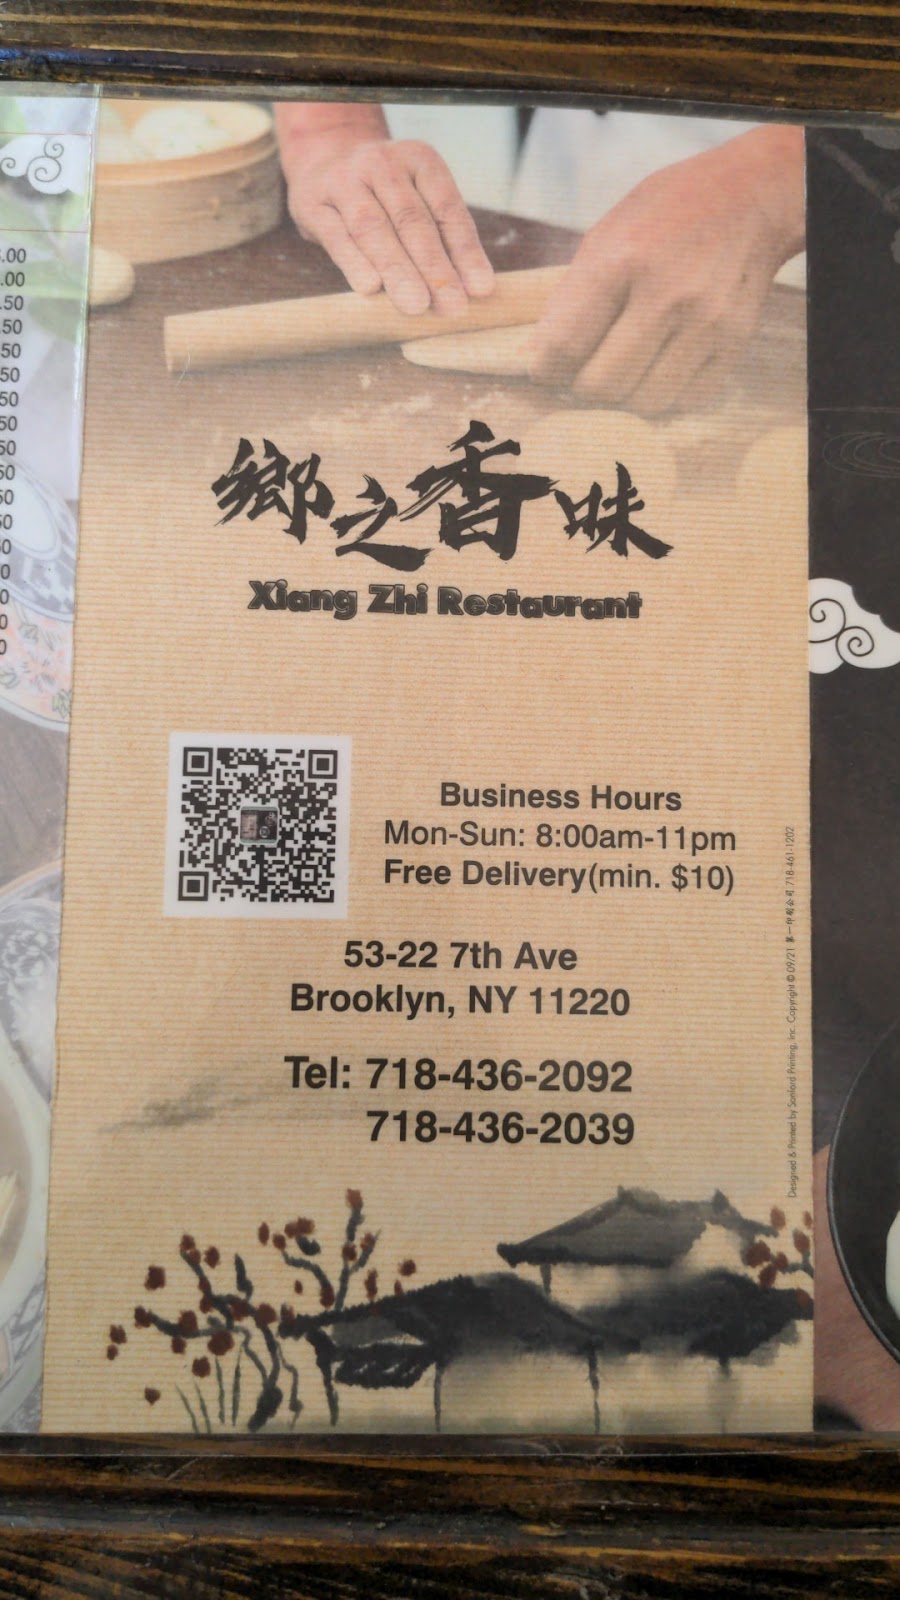 Xiang Zhi Restaurant | 53-22 7th Ave, Brooklyn, NY 11220 | Phone: (718) 436-2092